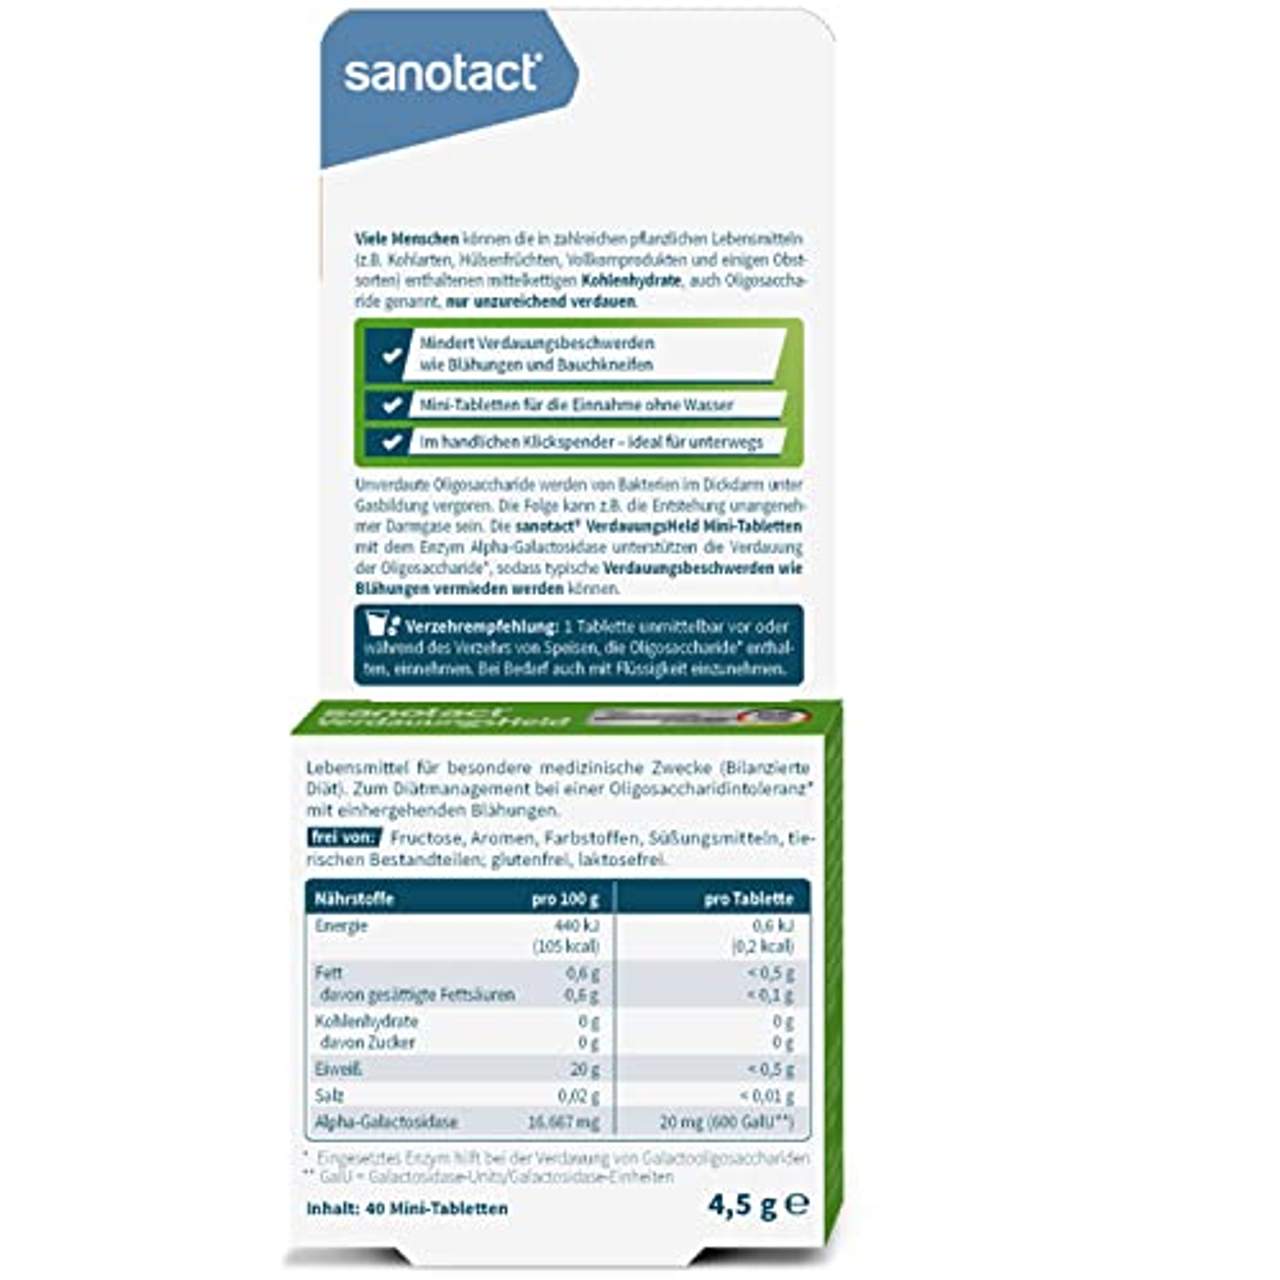 sanotact VerdauungsHeld 40 Mini-Tabletten